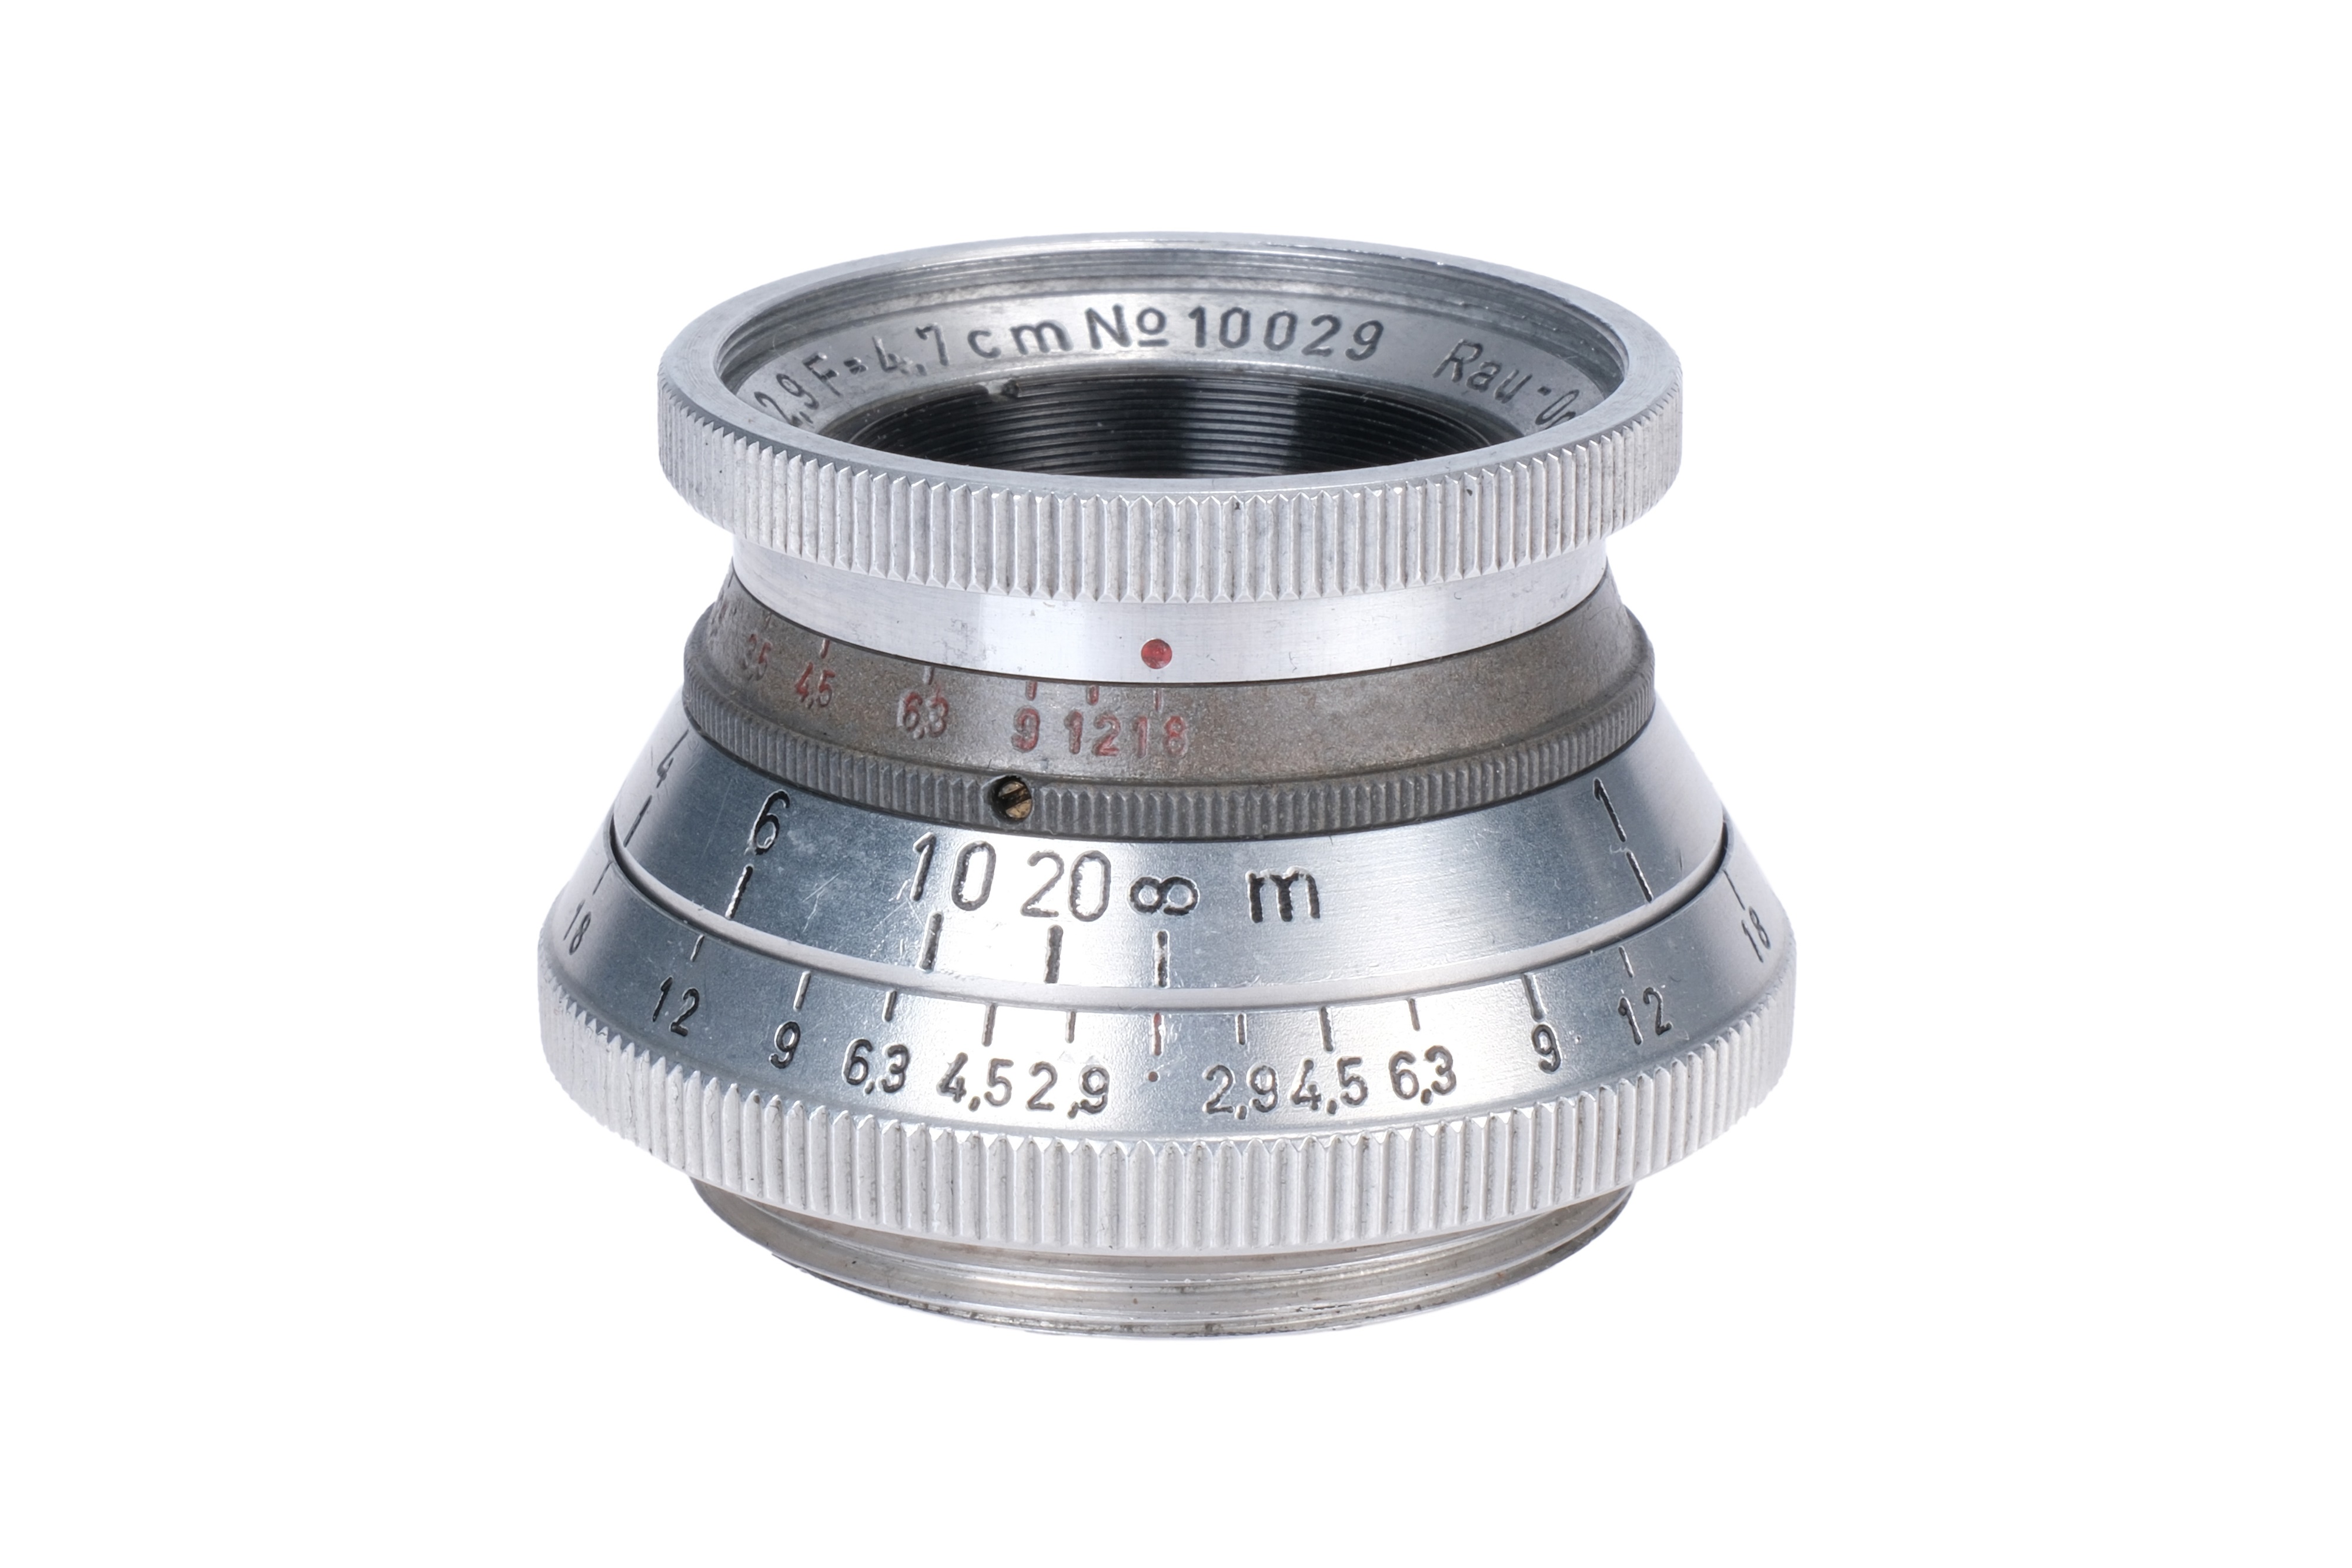 A Rau-Optik Astro-Astan f/2.9 47mm Lens,